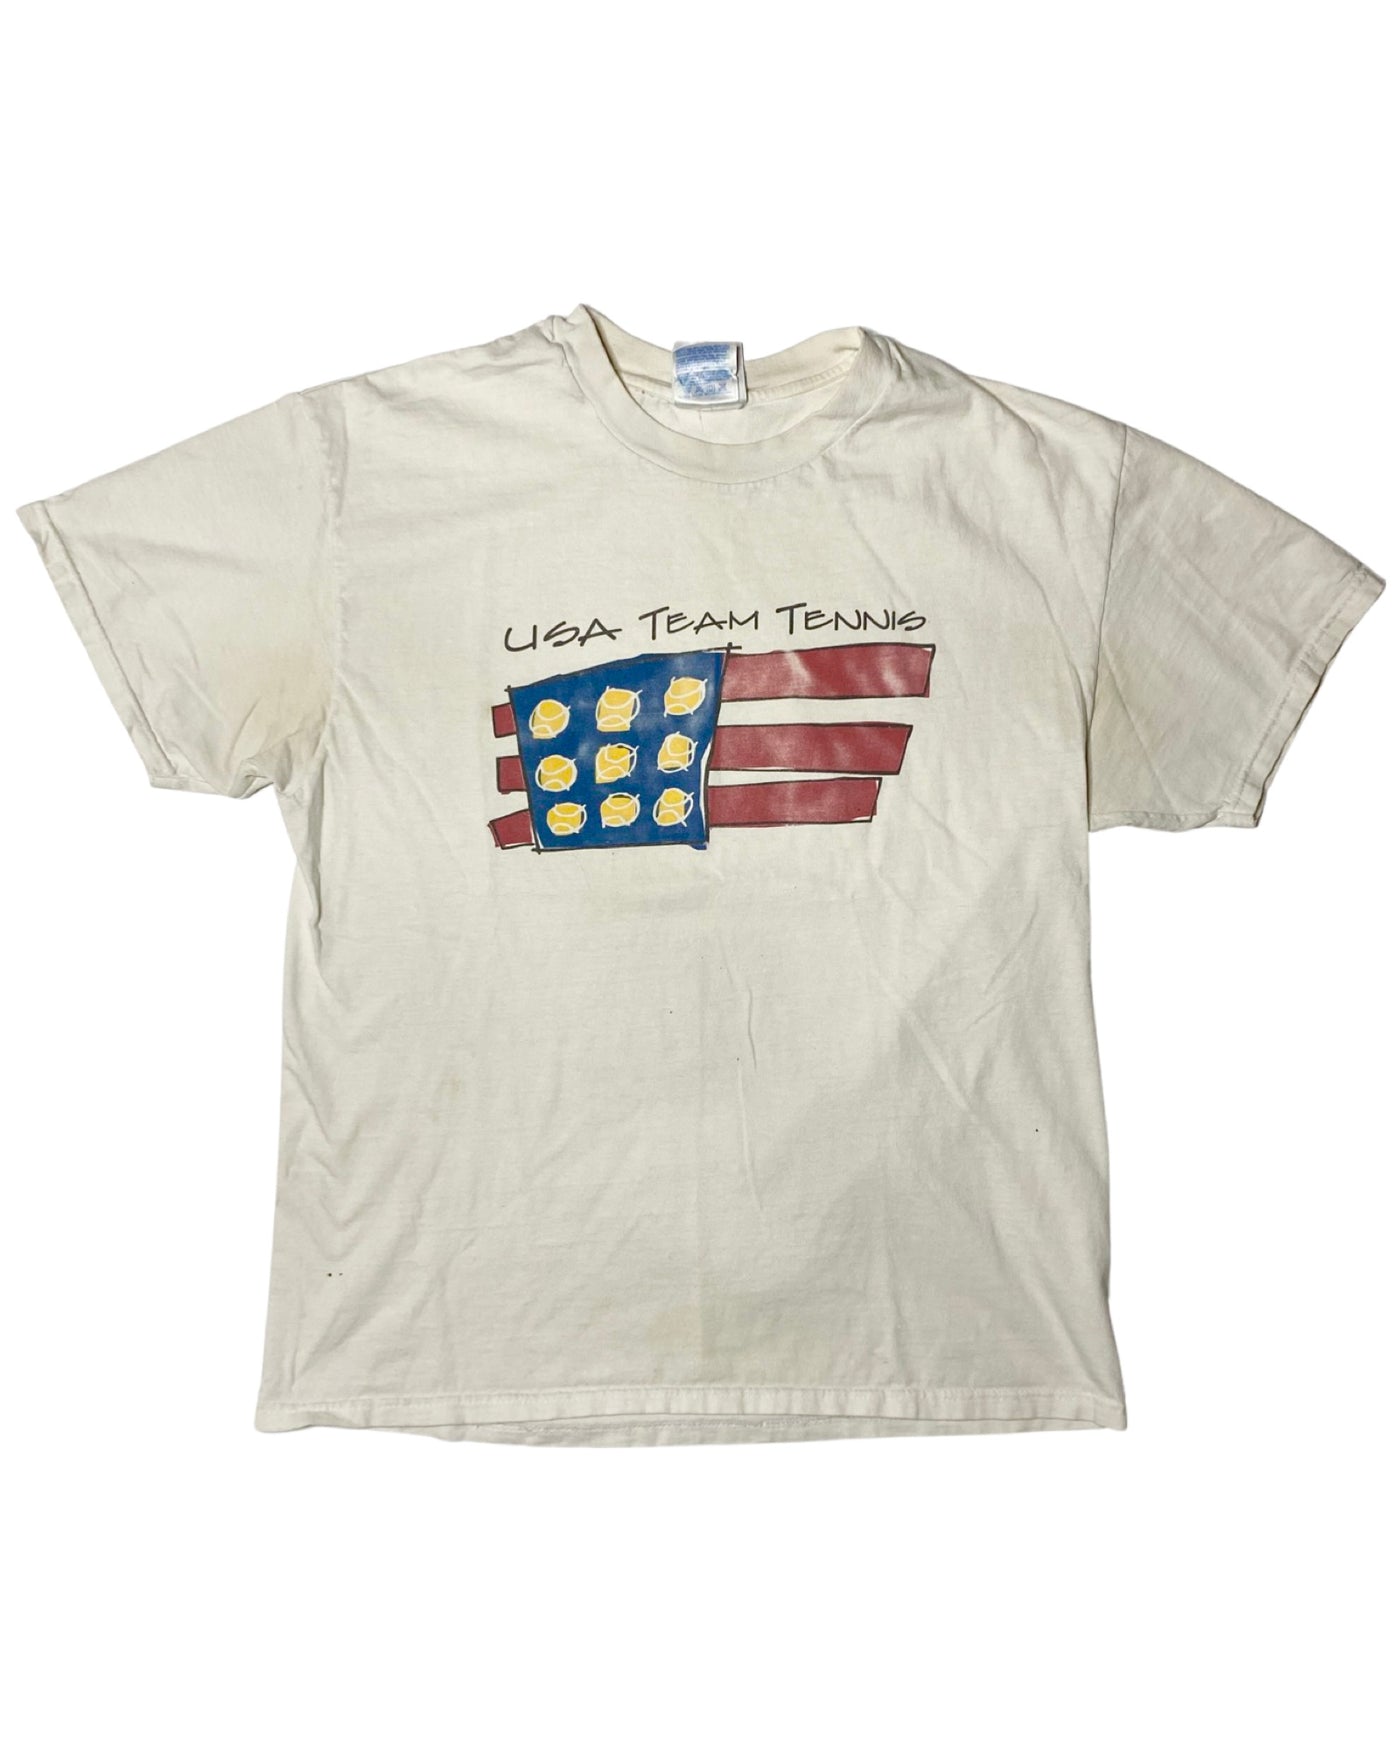 Vintage 1999 USA Tennis T-Shirt